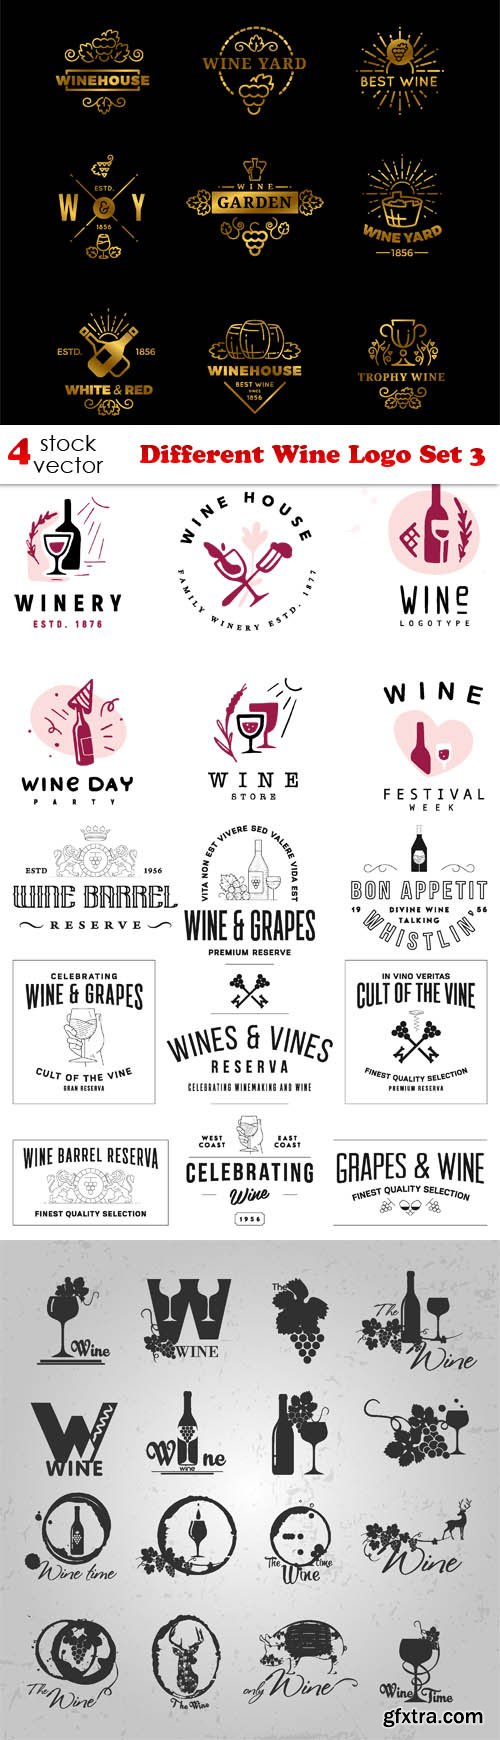 Vectors - Different Wine Logo Set 3